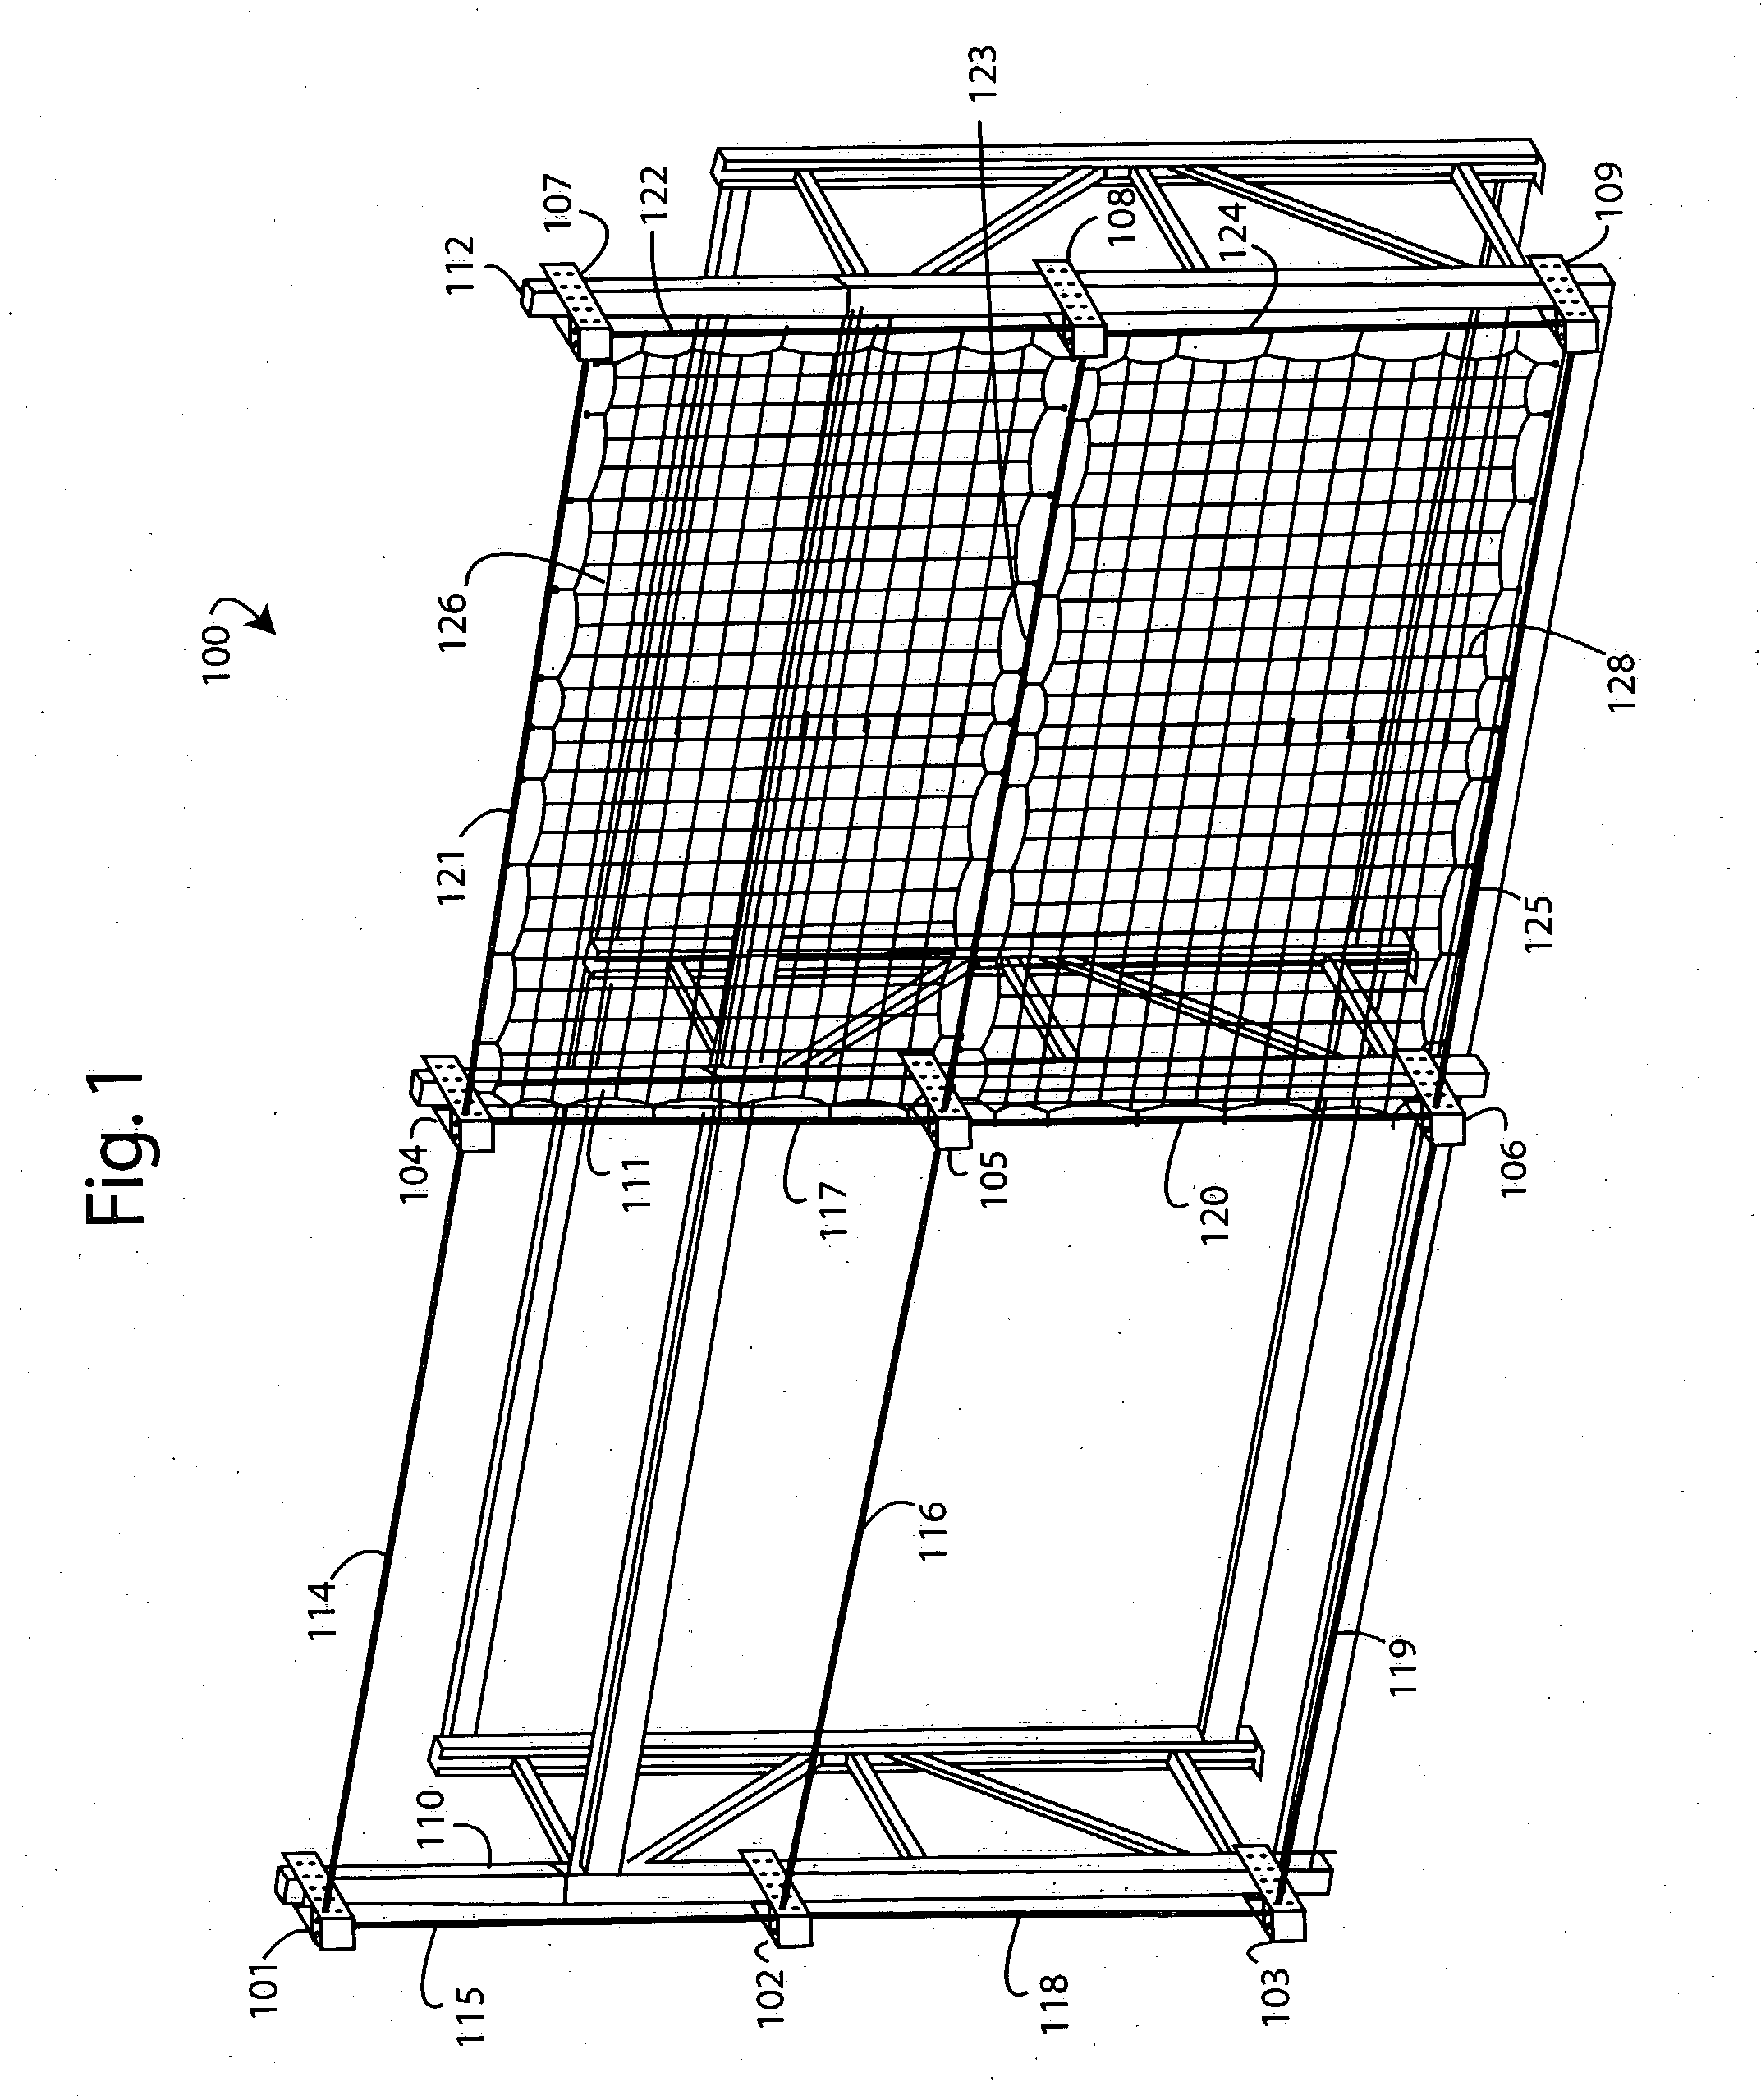 Offset pallet-rack safety net system